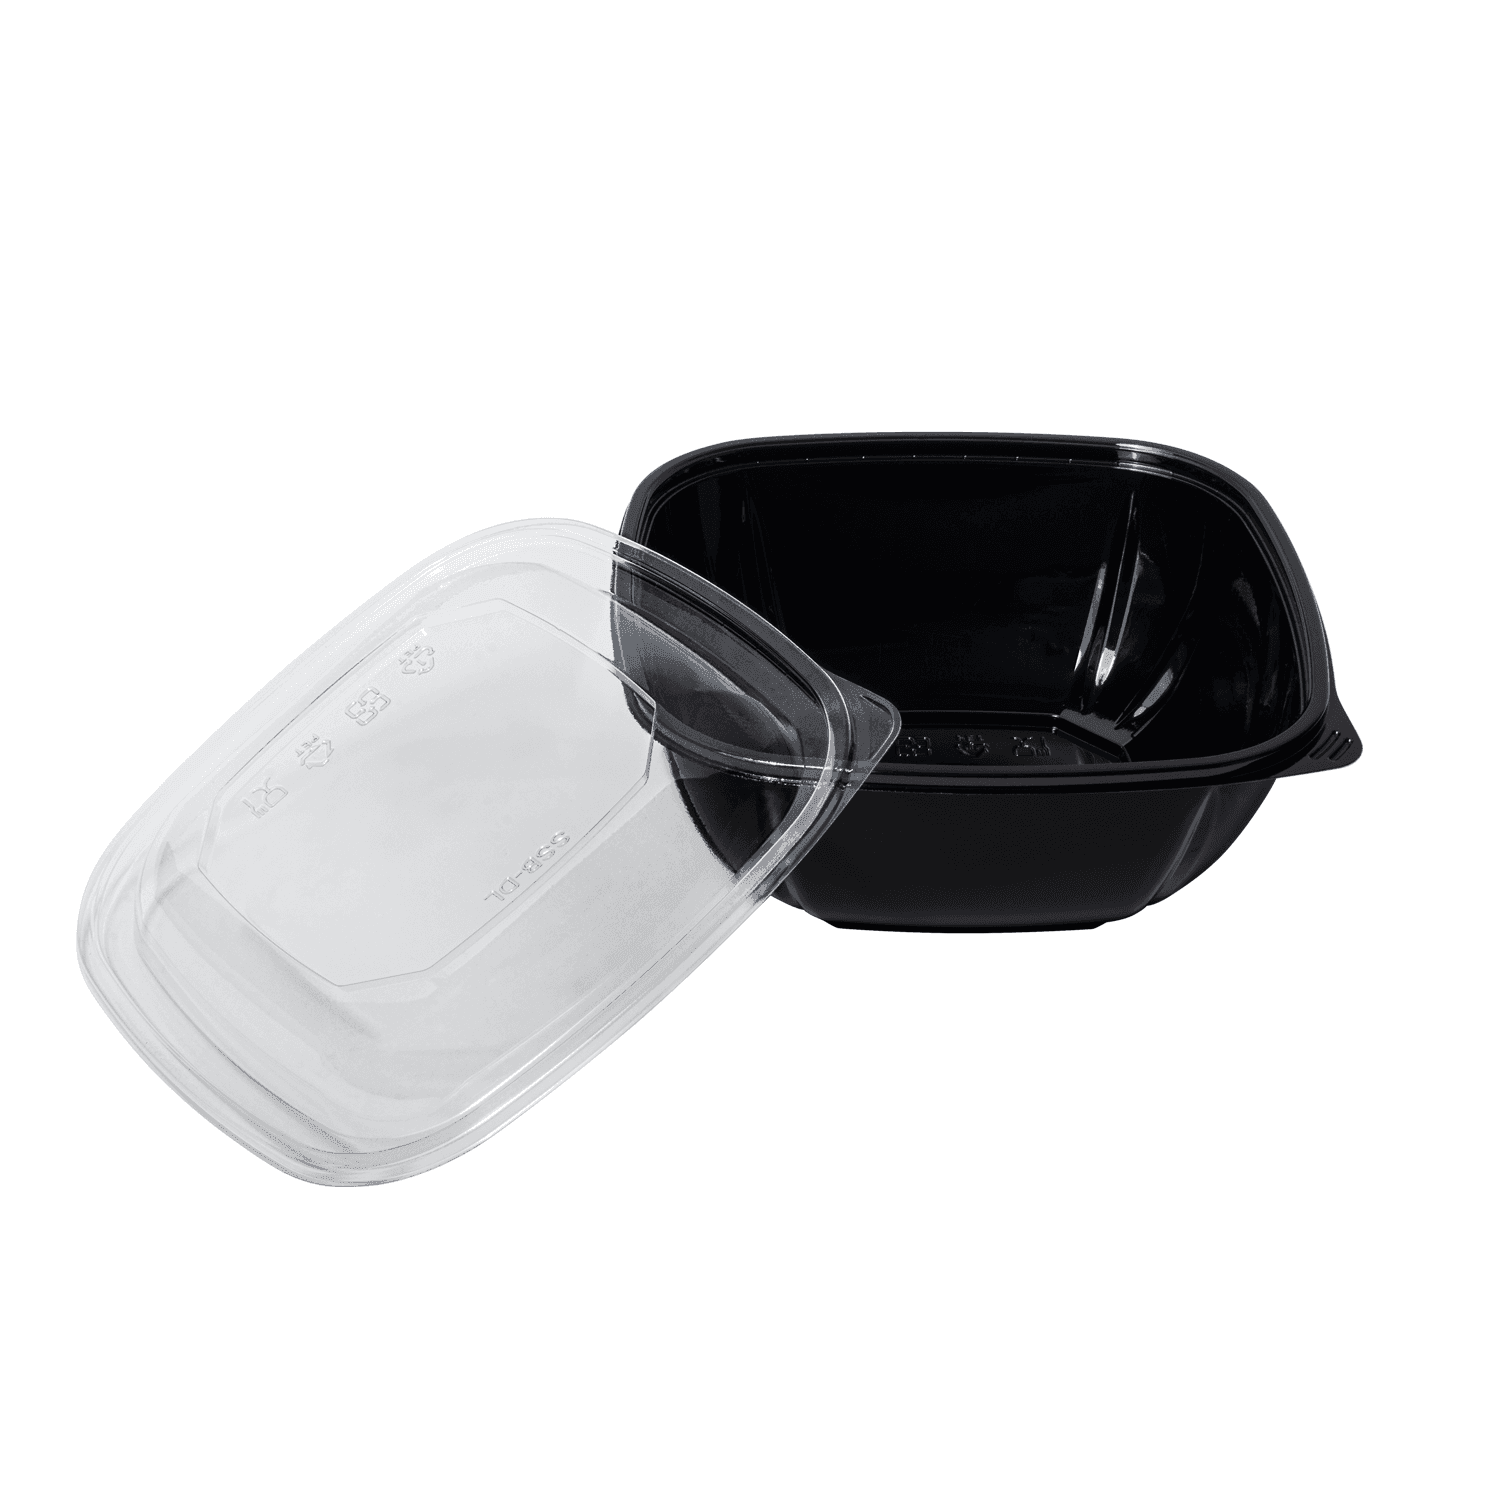 Black Karat 48oz PET Square Bowl with clear lid next to bowl